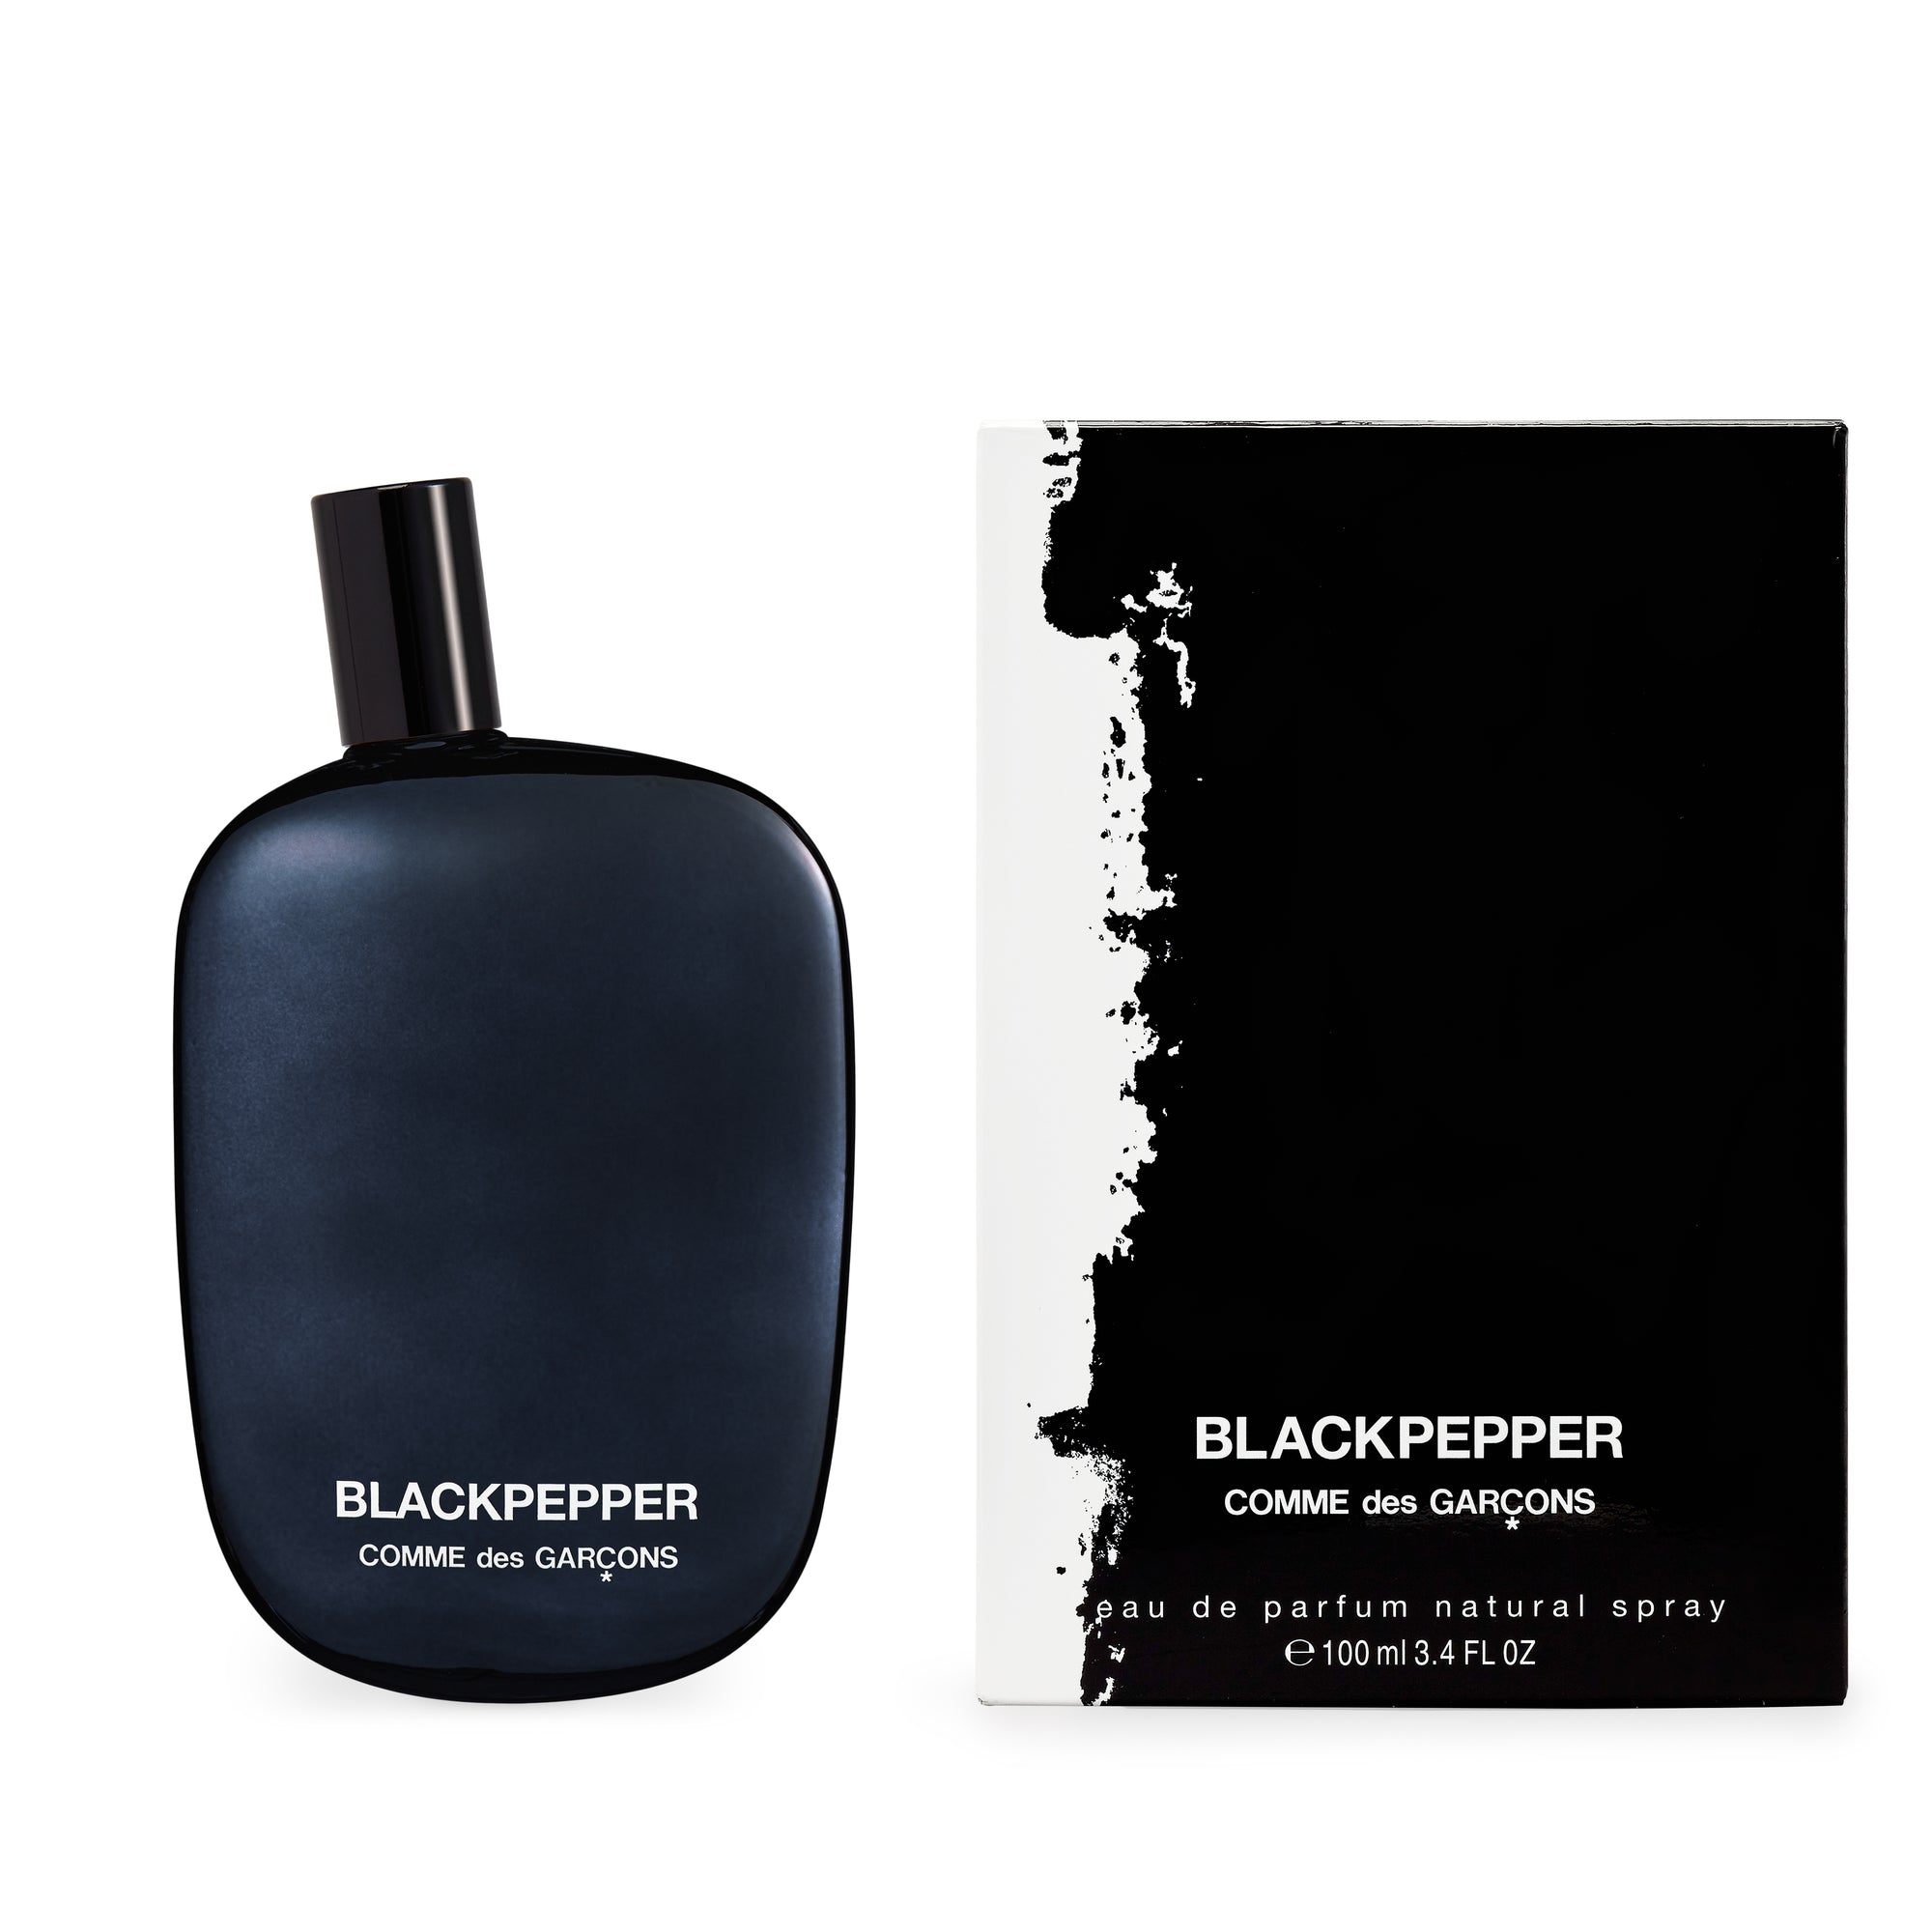 CDG Parfum - Blackpepper - (Natural Spray) view 2